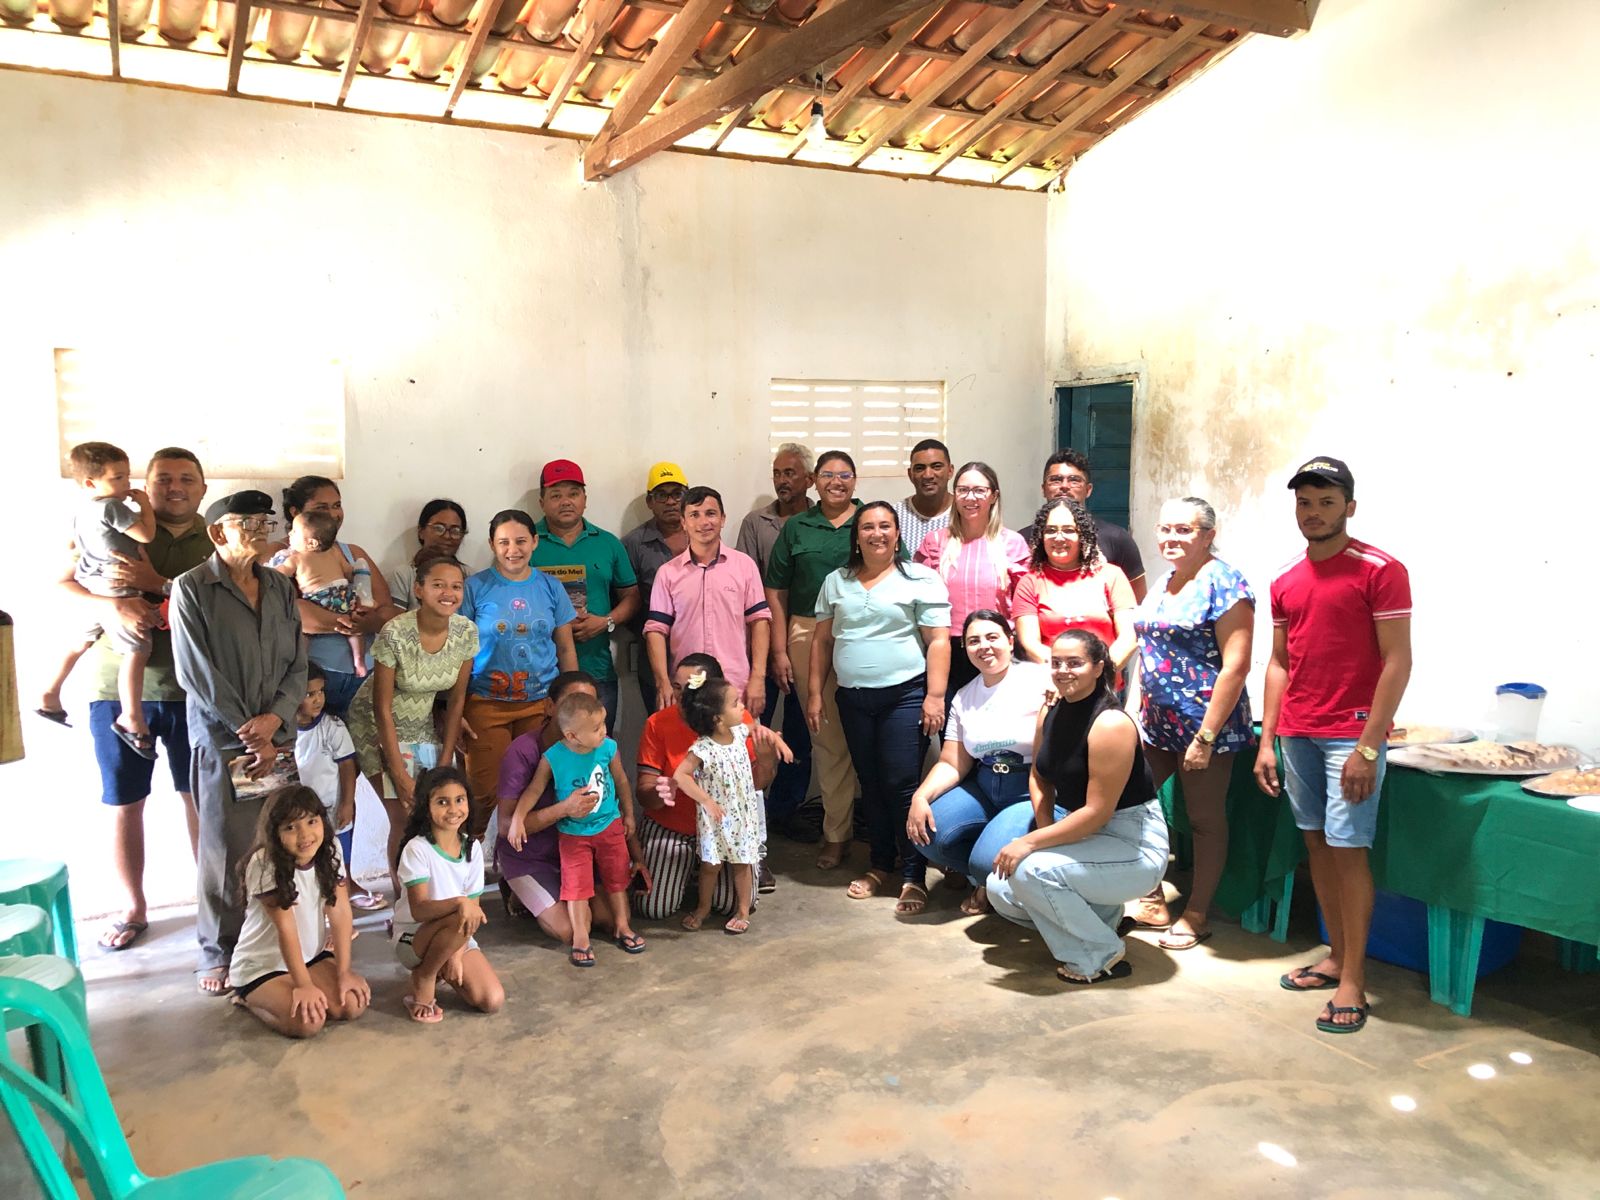 Prefeitura de Serra do Mel promove encontro na Vila Pernambuco para ouvir demandas da comunidade